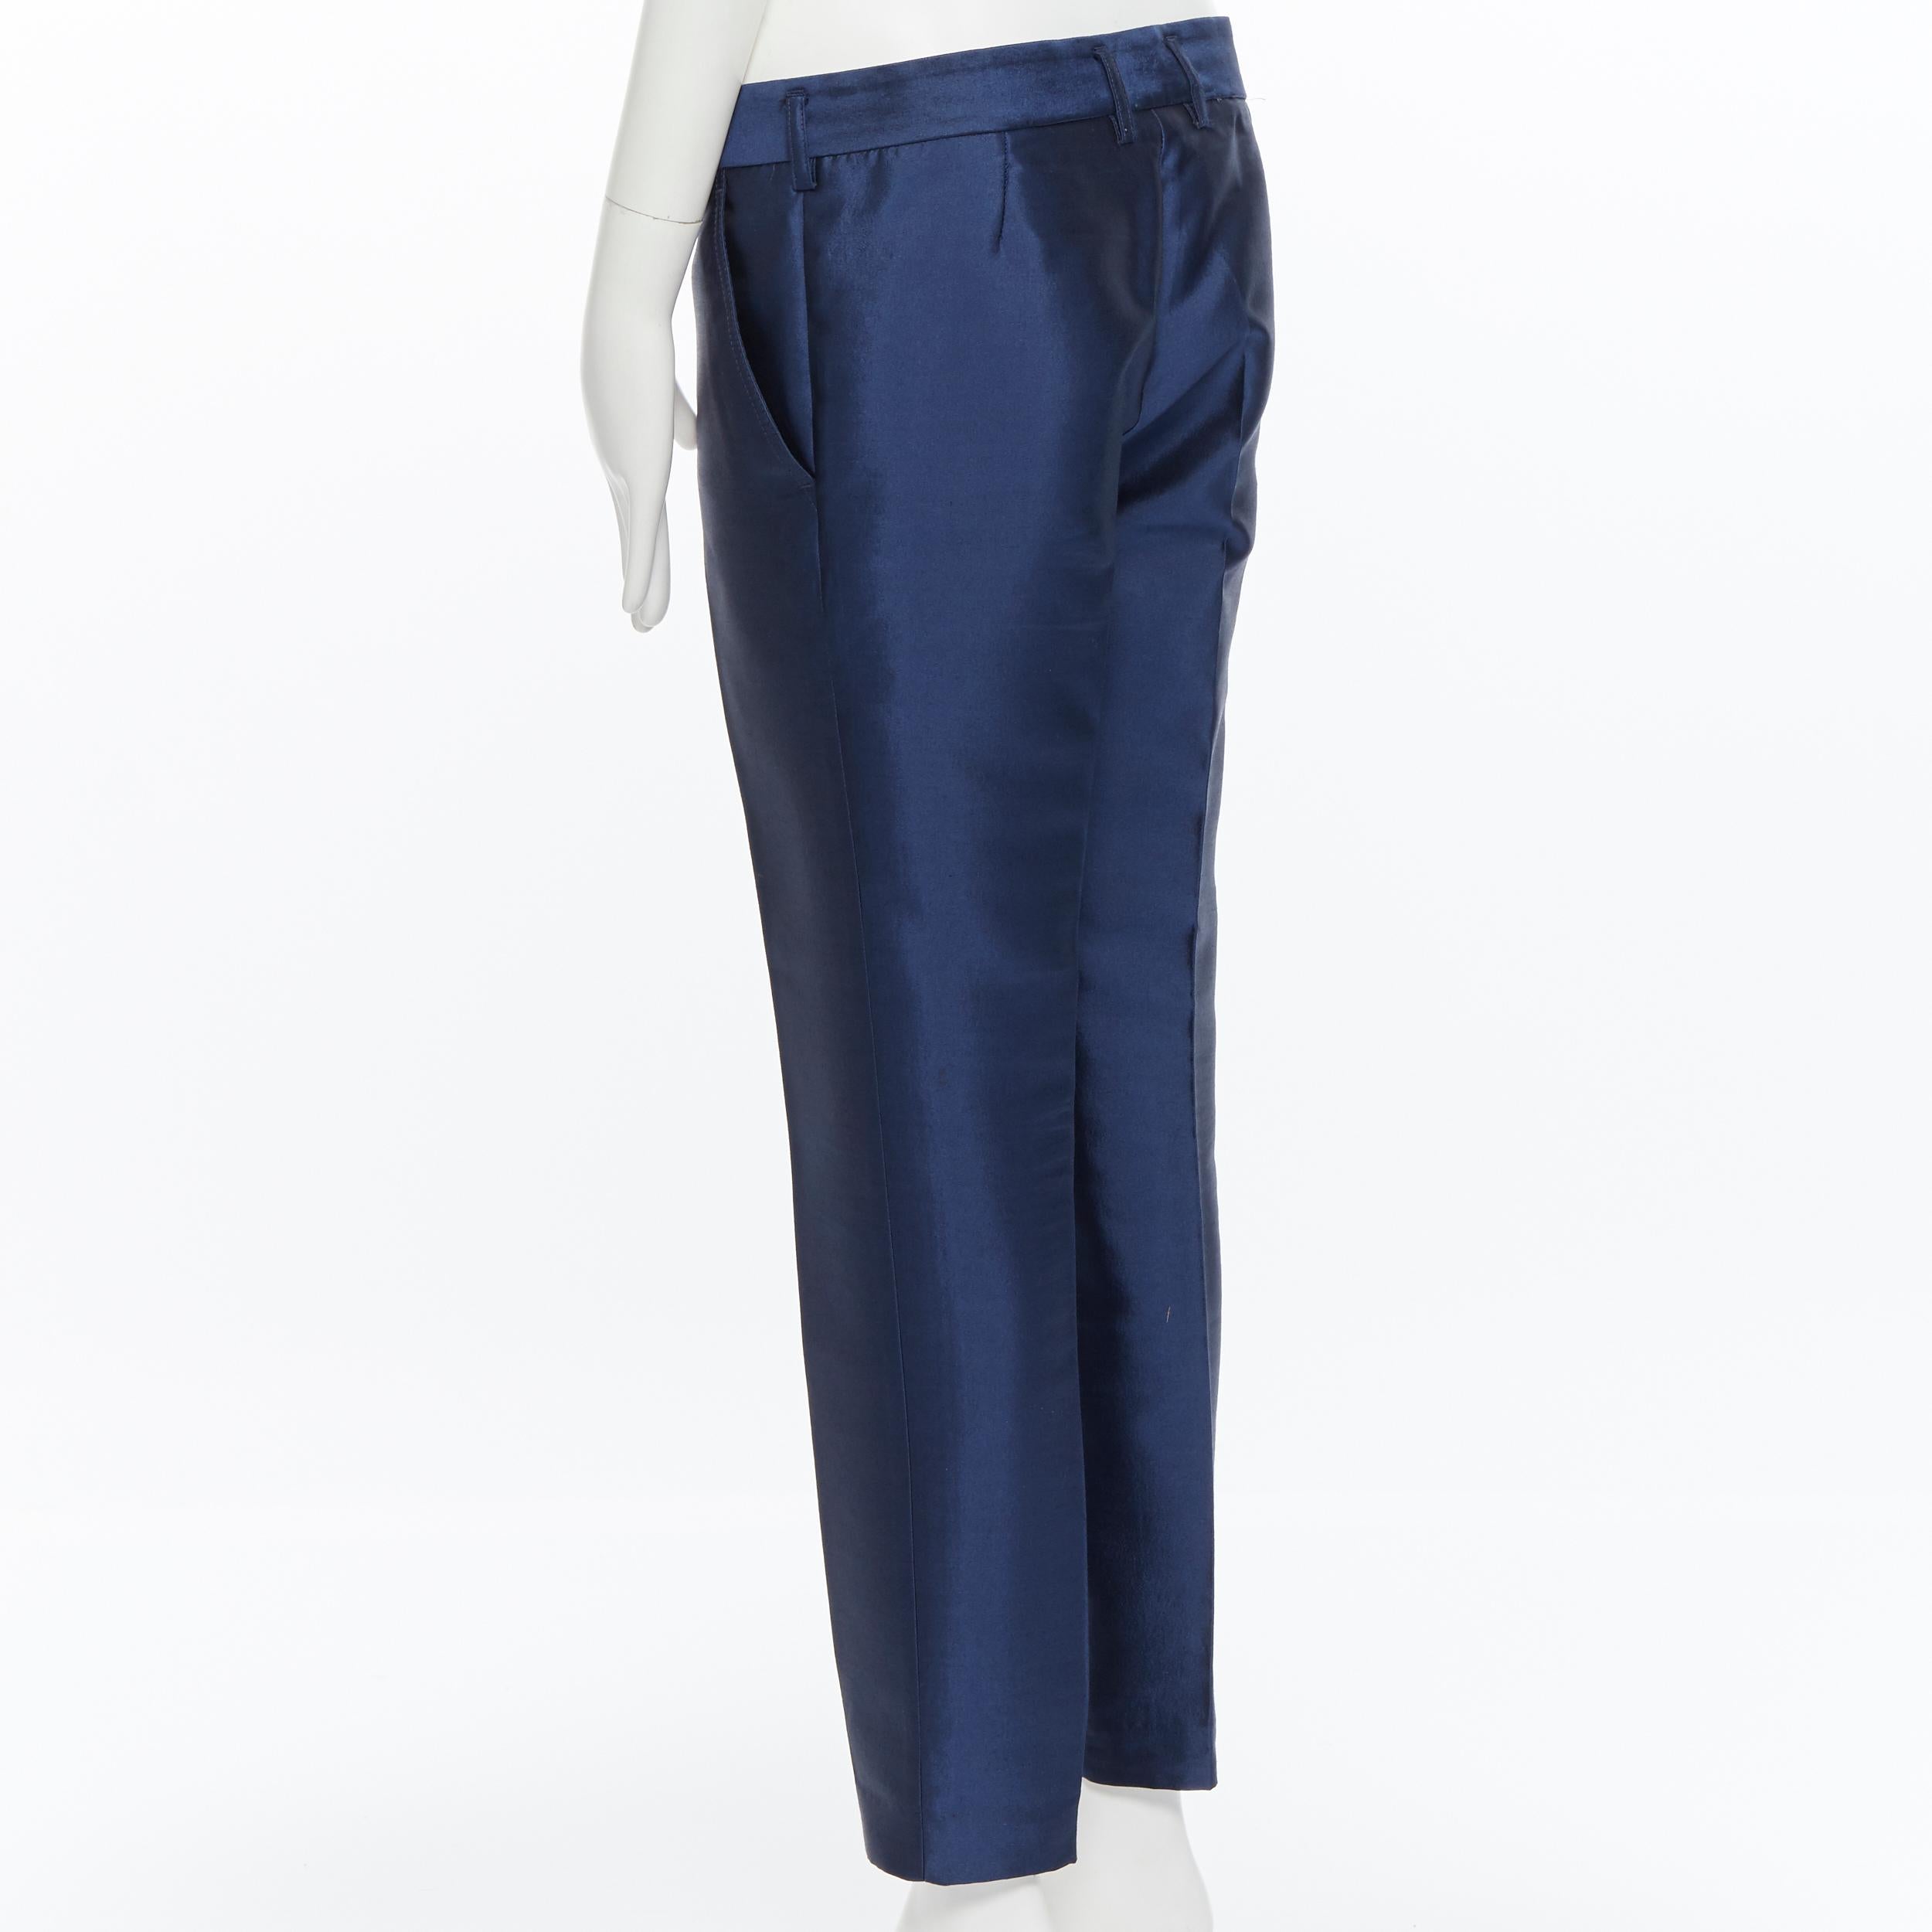 Black HAIDER ACKERMANN navy blue wool silk blend cropped trousers pants FR38 32